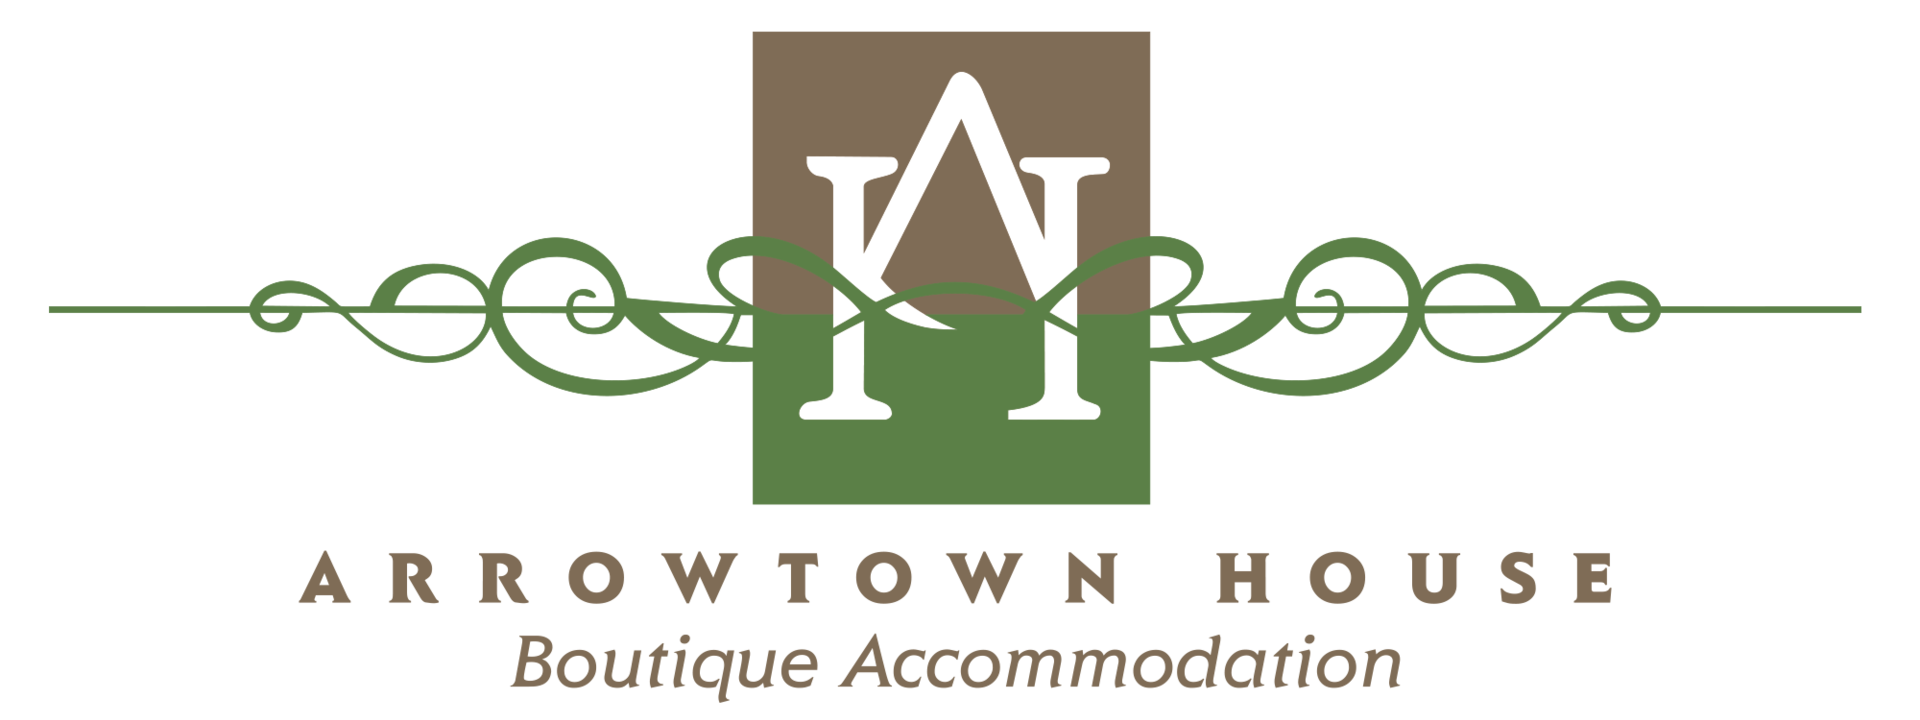 ArrowtownHouse-logo-transparentBackground.png